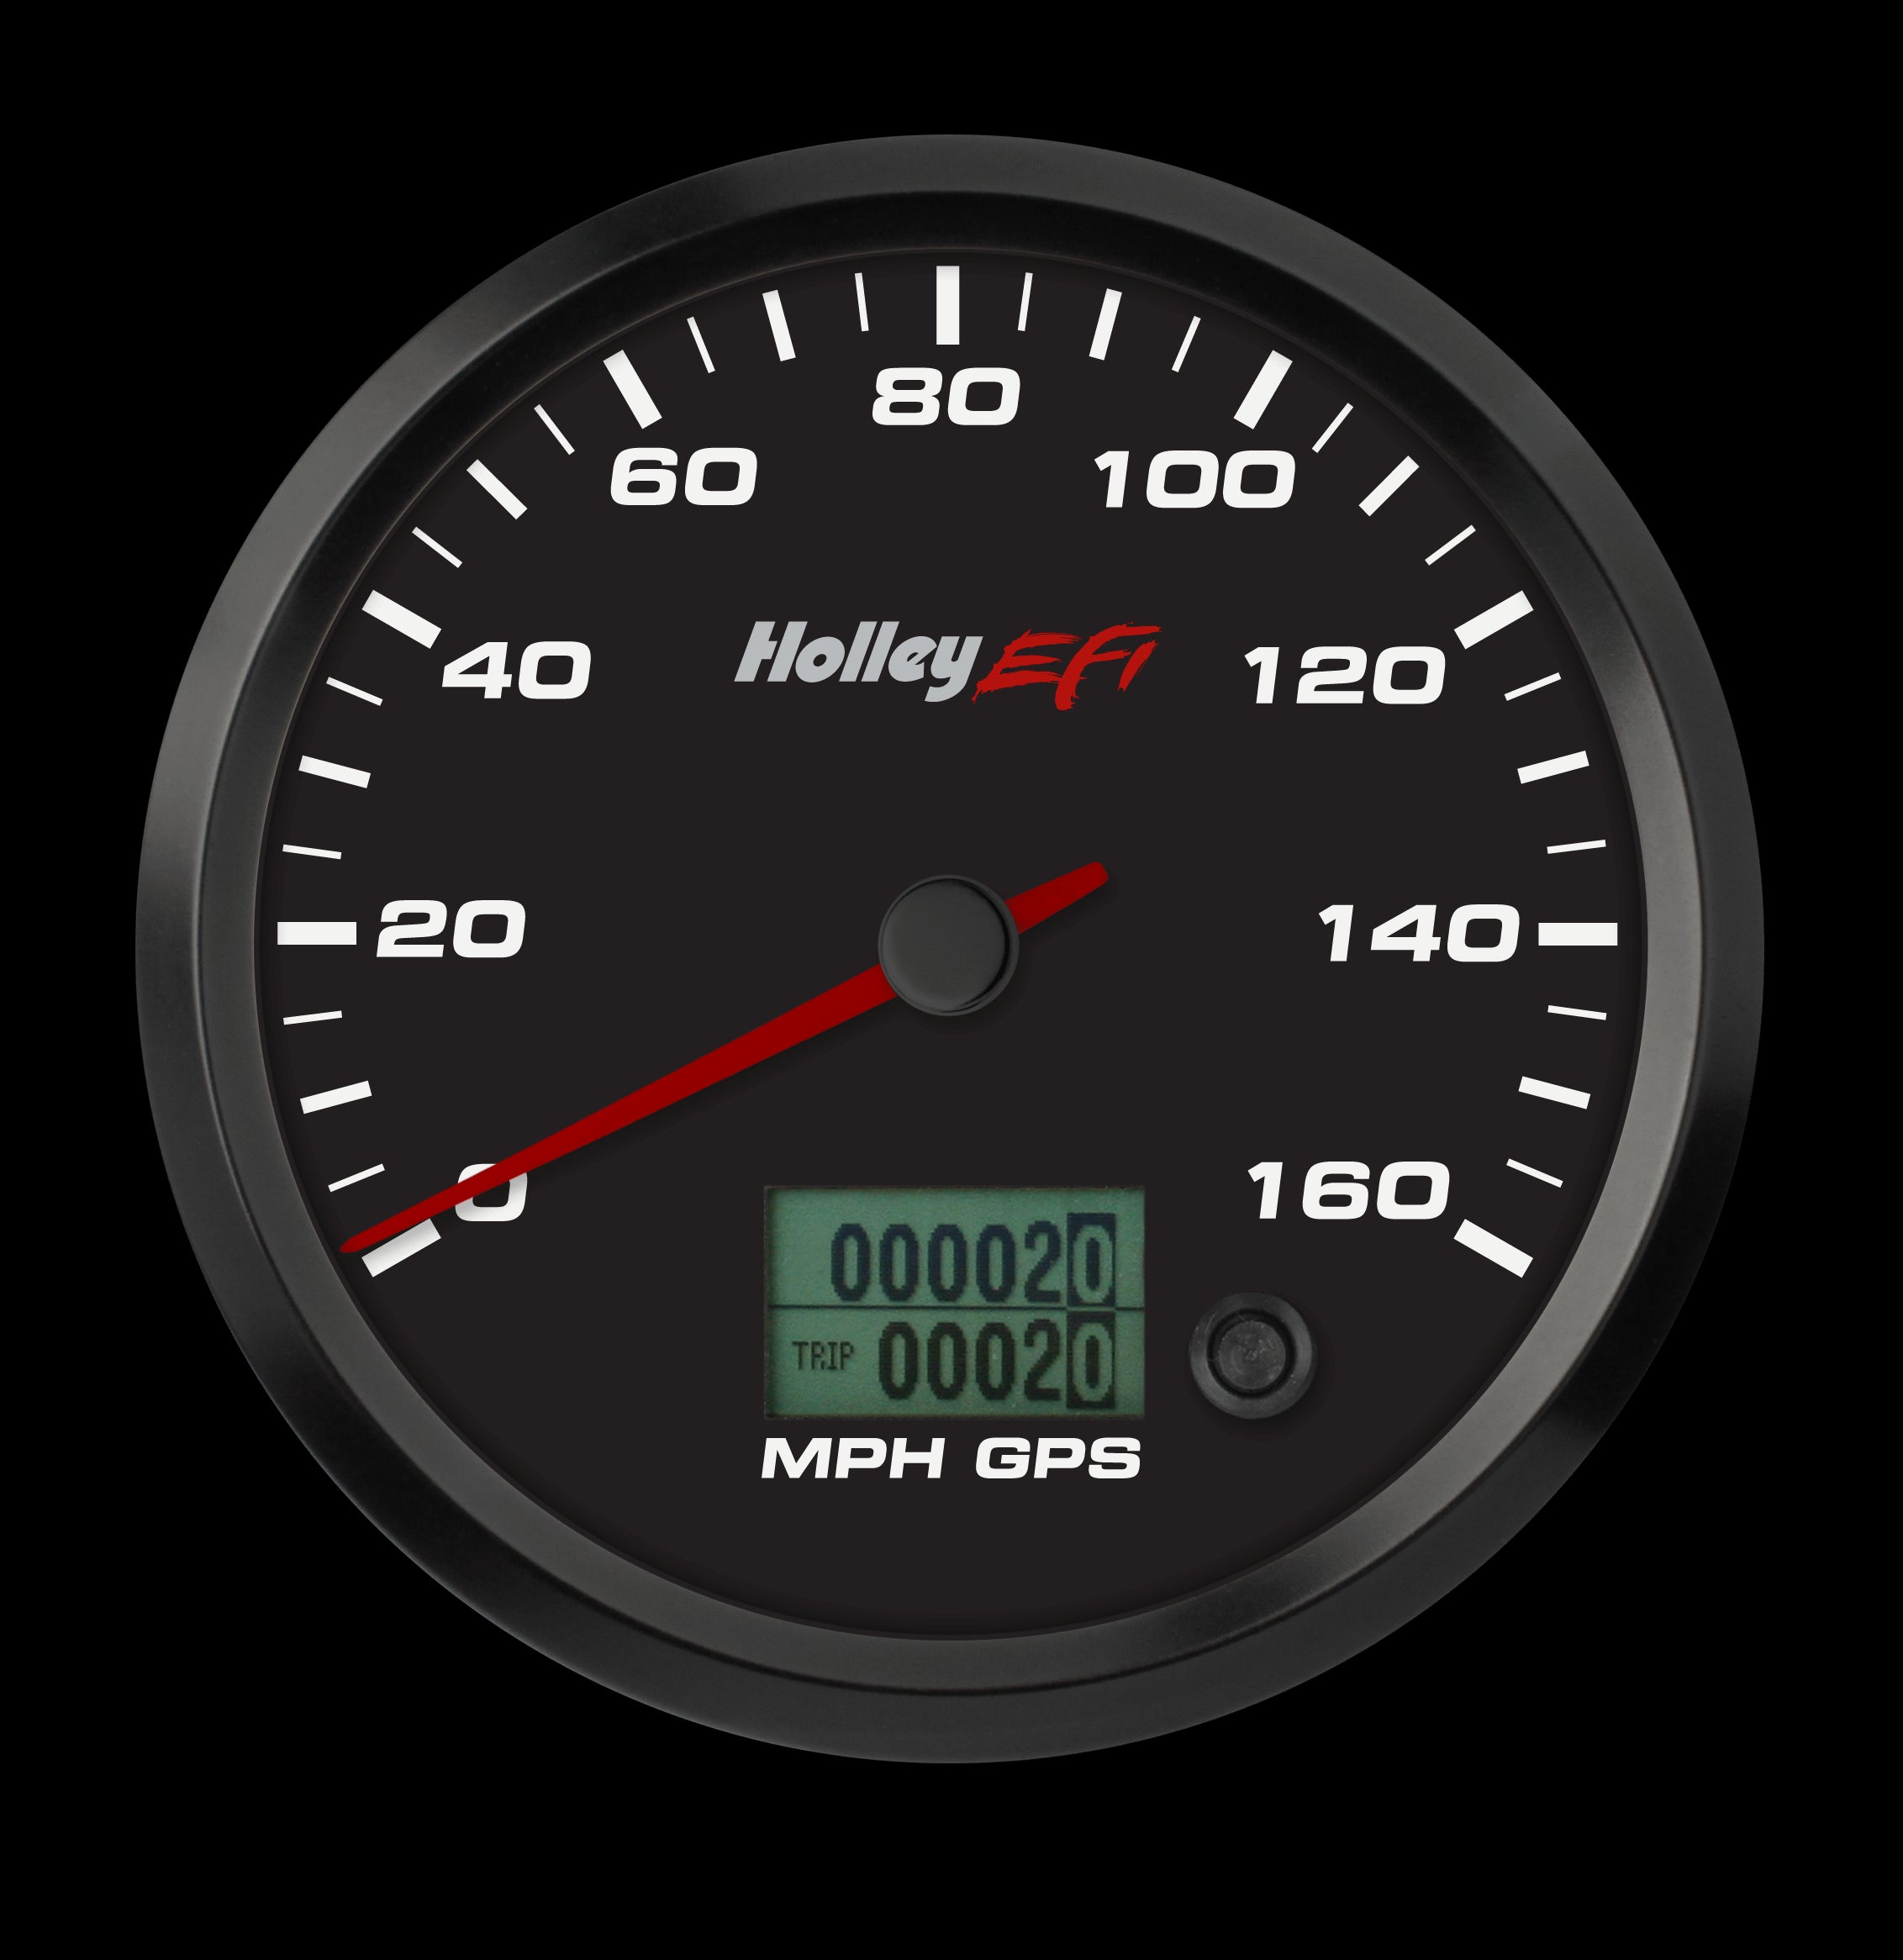 4-1/2 GPS Speedometer (w/ Odometer), 0-160 MPH